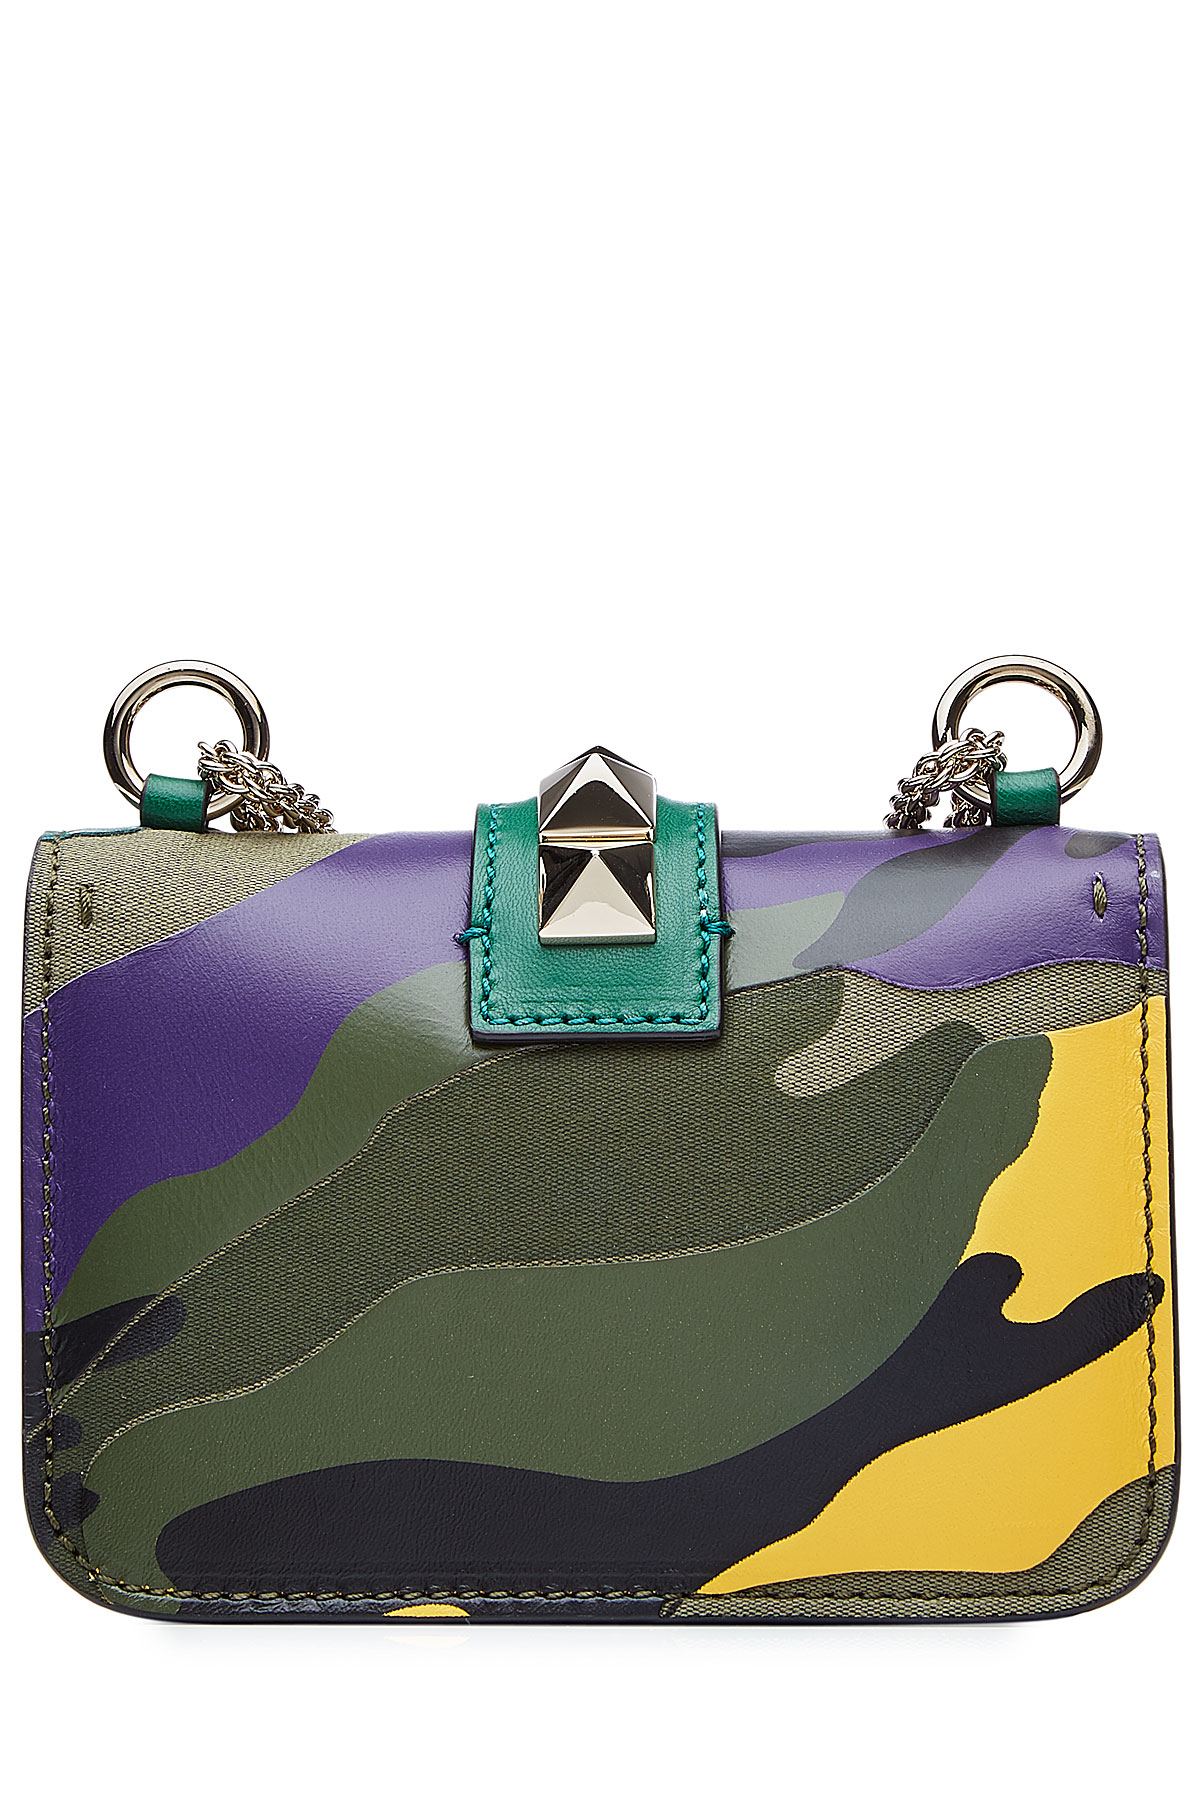 Lyst - Valentino Mini Rockstud Leather Shoulder Bag - Multicolor